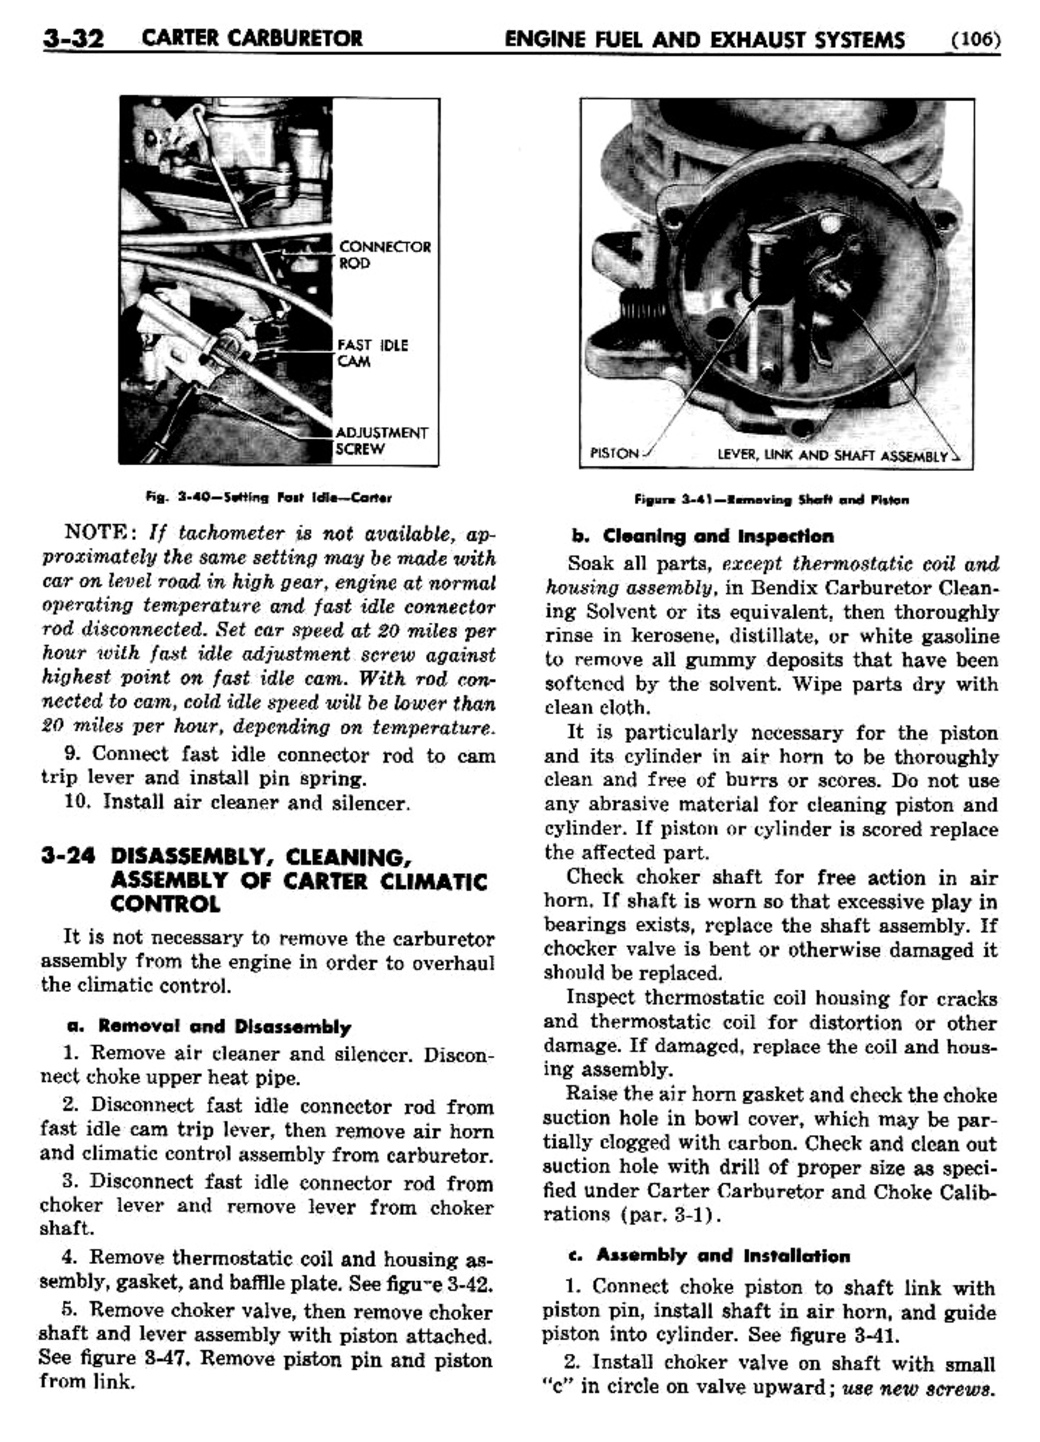 n_04 1948 Buick Shop Manual - Engine Fuel & Exhaust-032-032.jpg